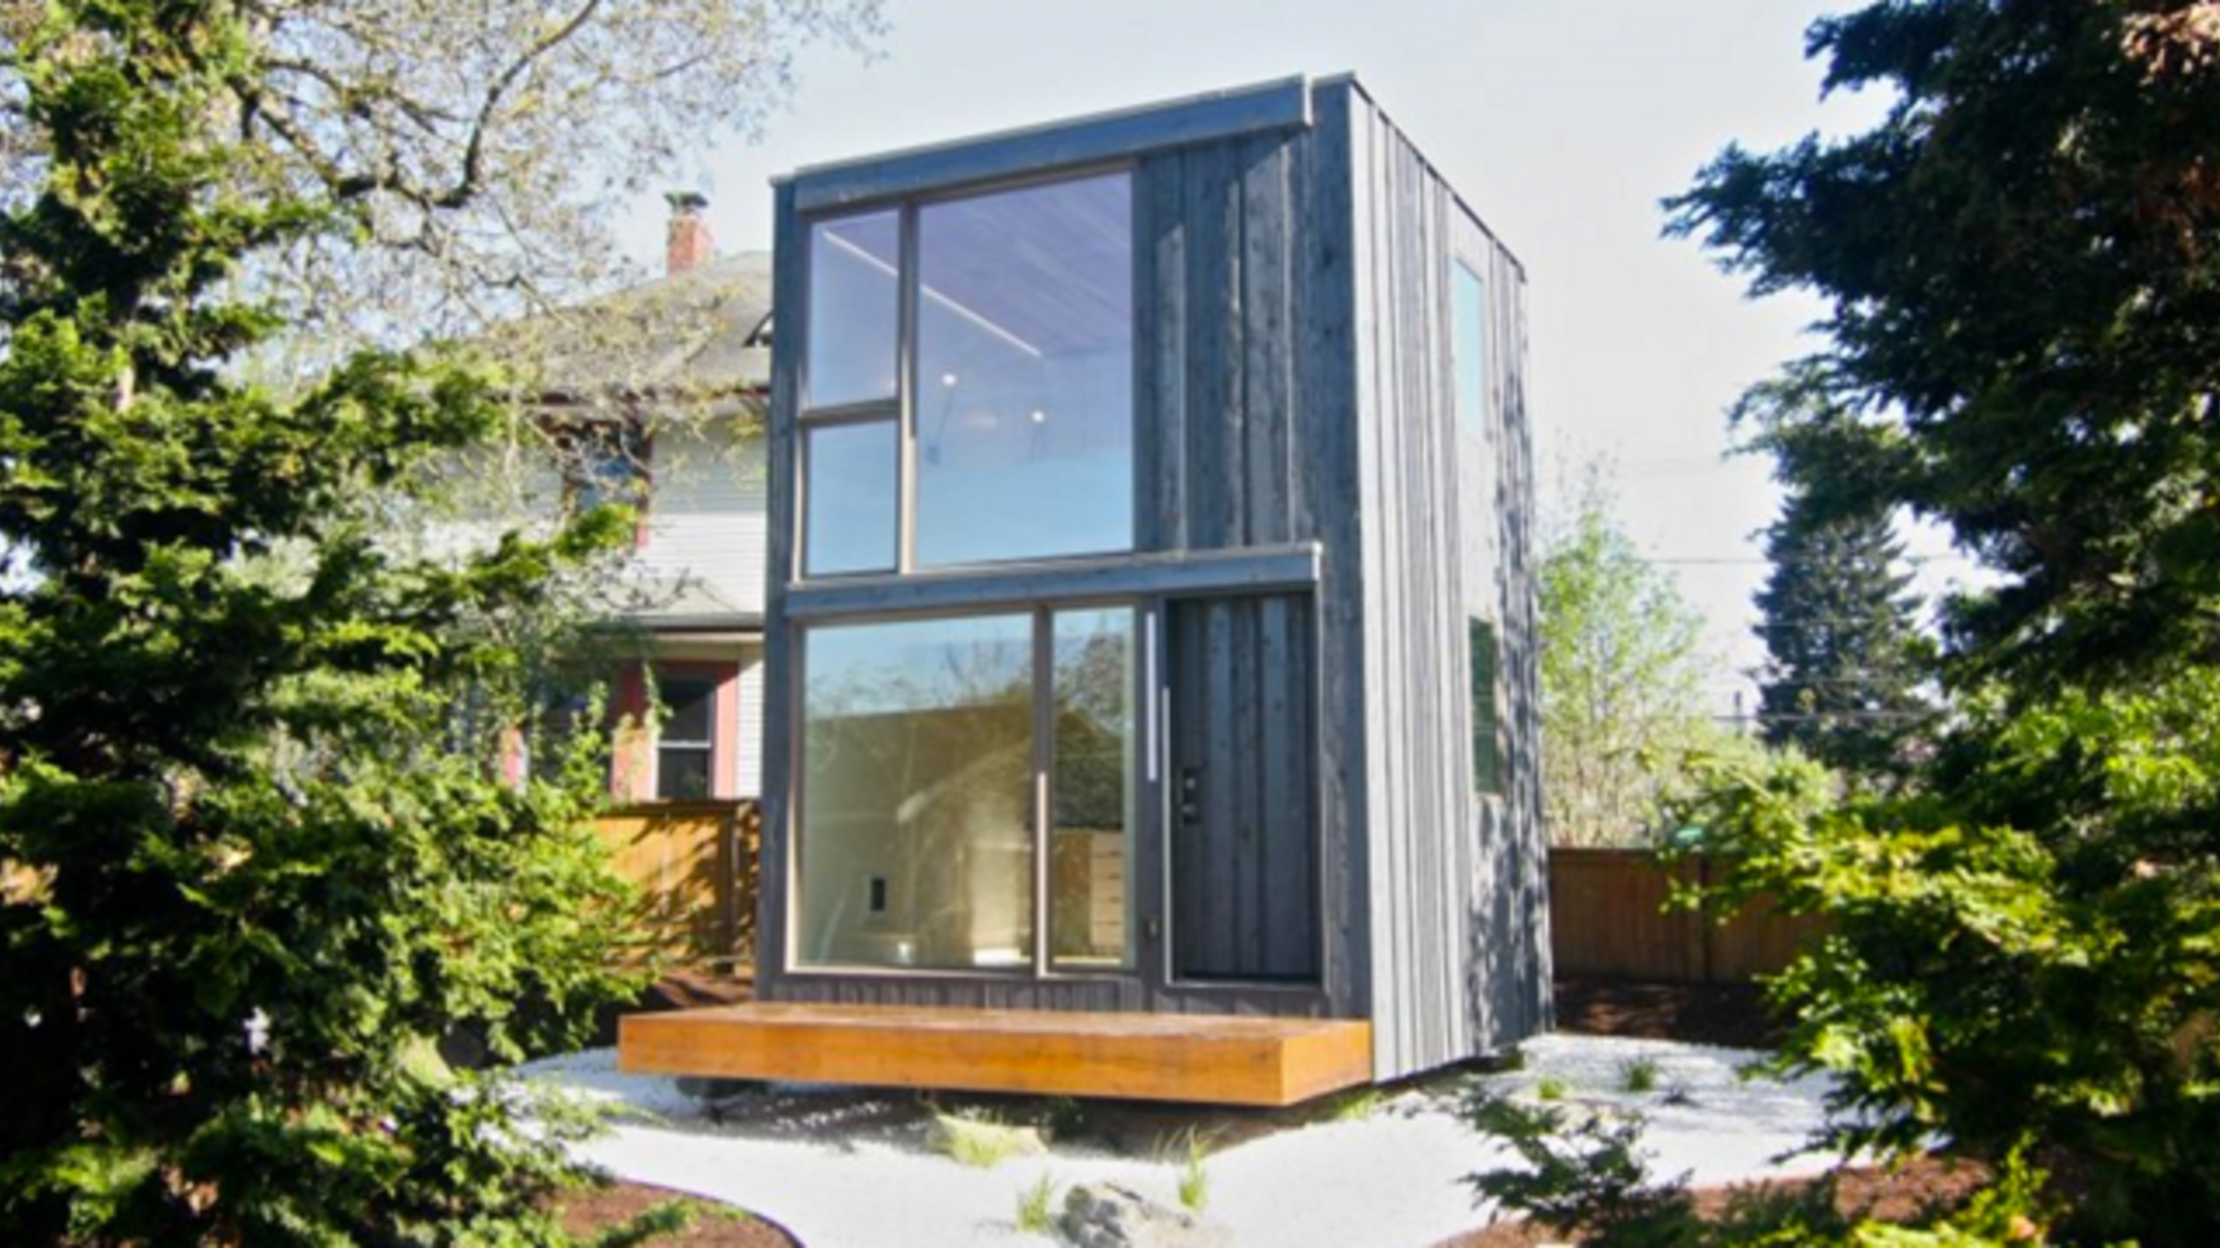 Tiny, Energy-Efficient House Rotates to Soak up Sunlight | Mental Floss